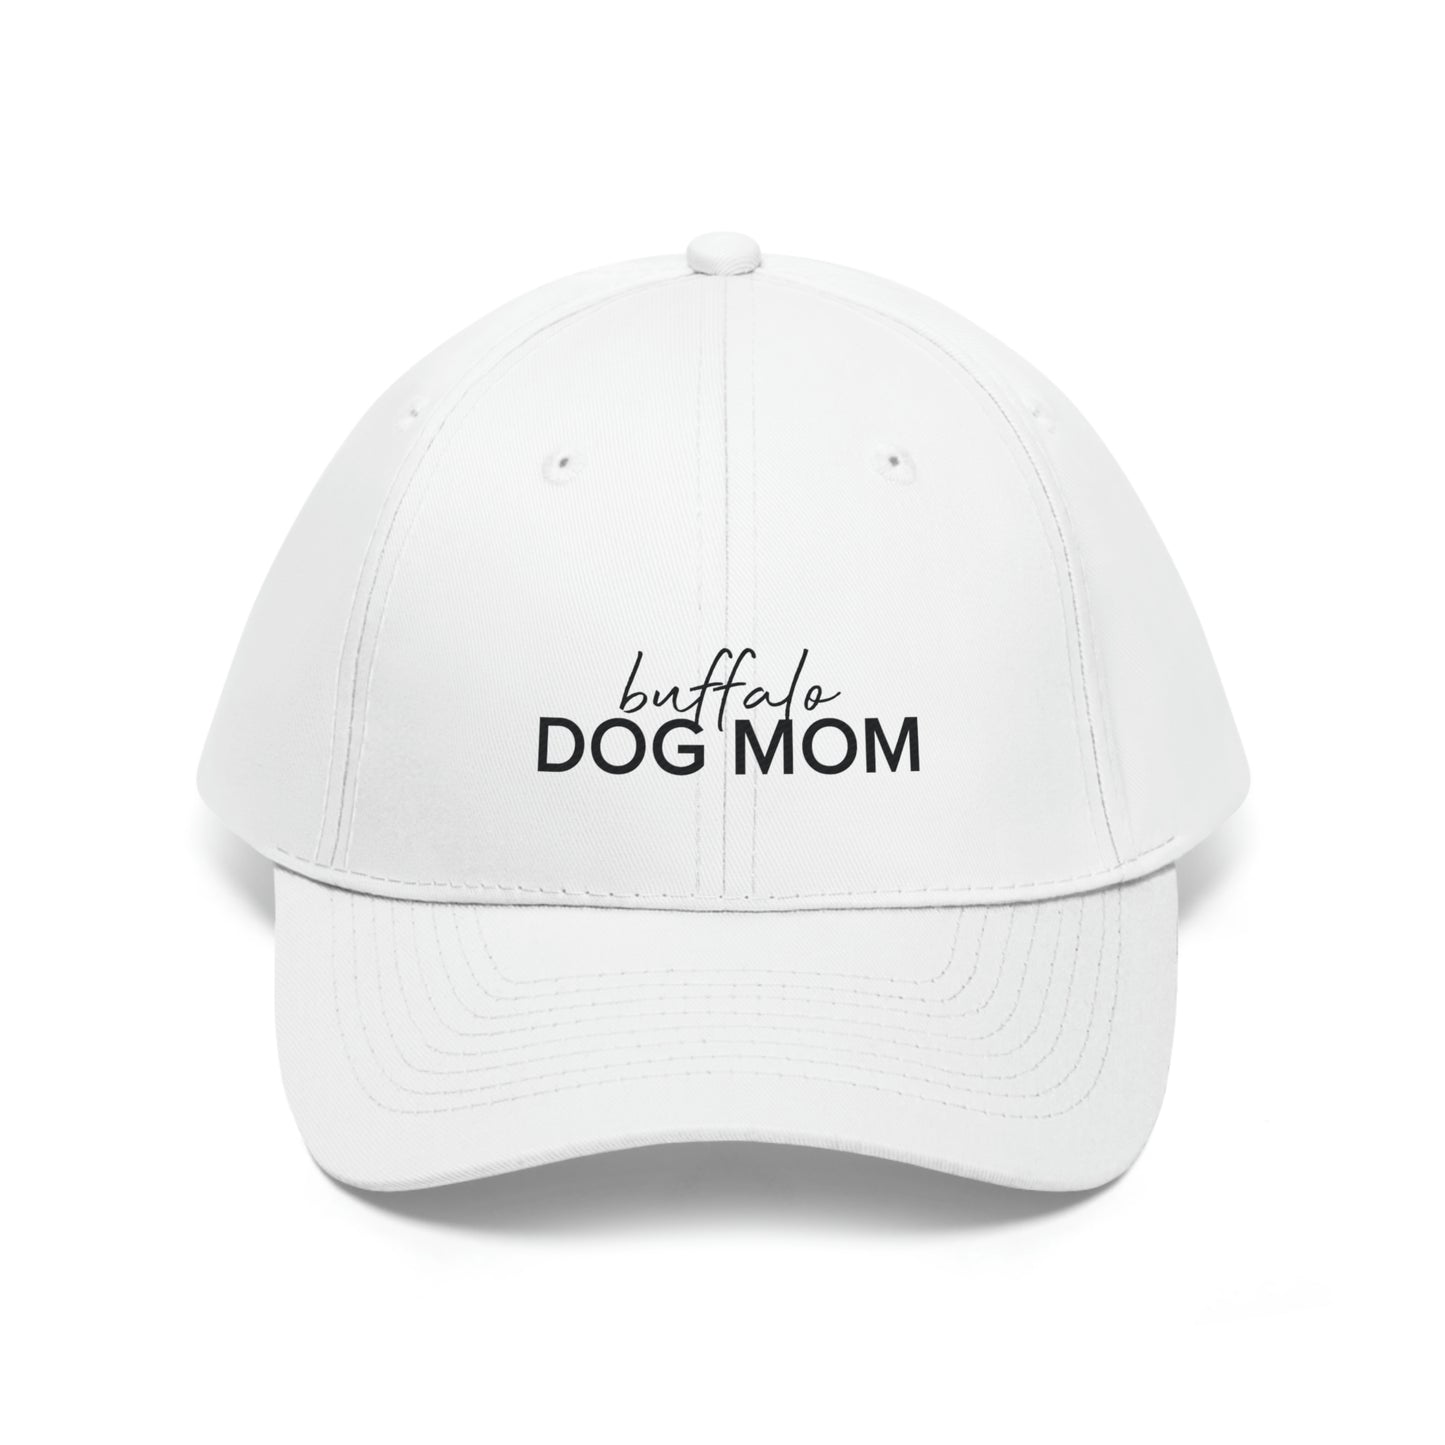 Buffalo Dog Mom Embroidered Hat